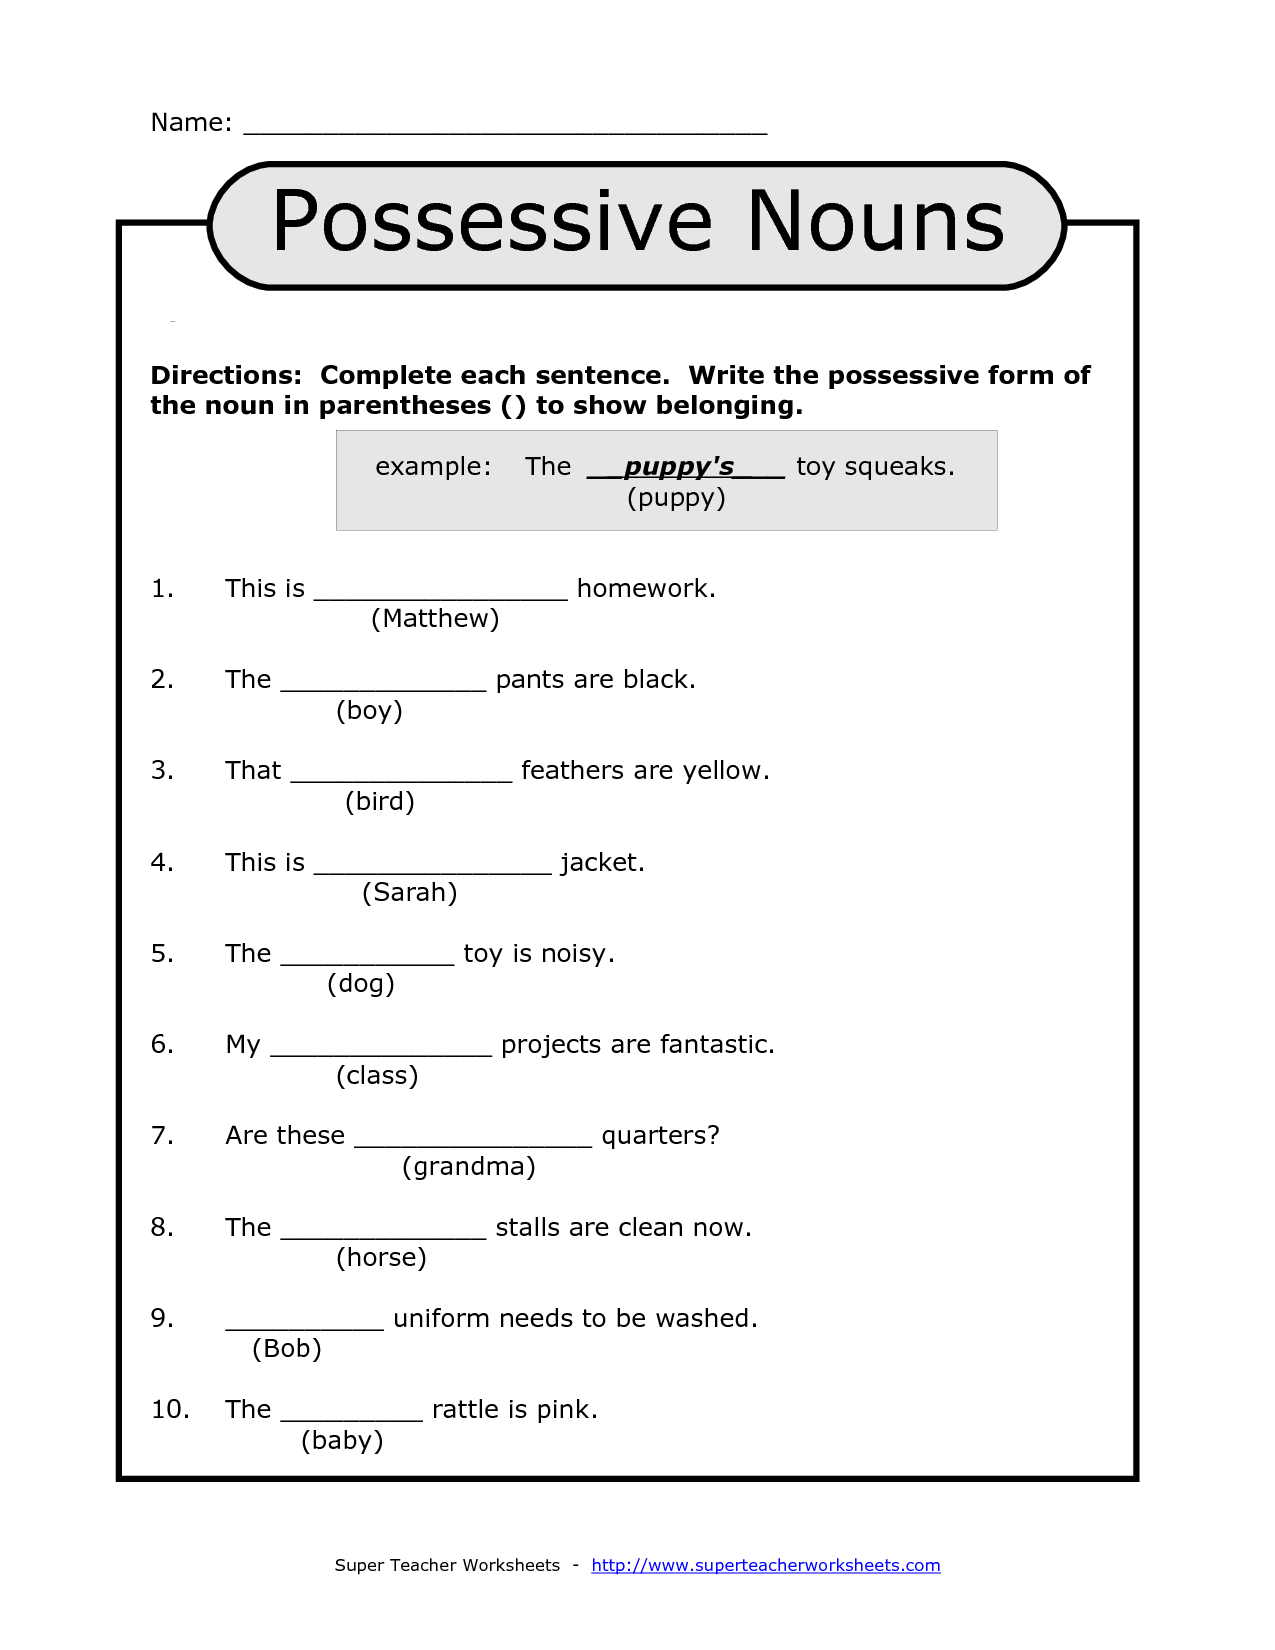 Possessive Nouns Worksheets Image